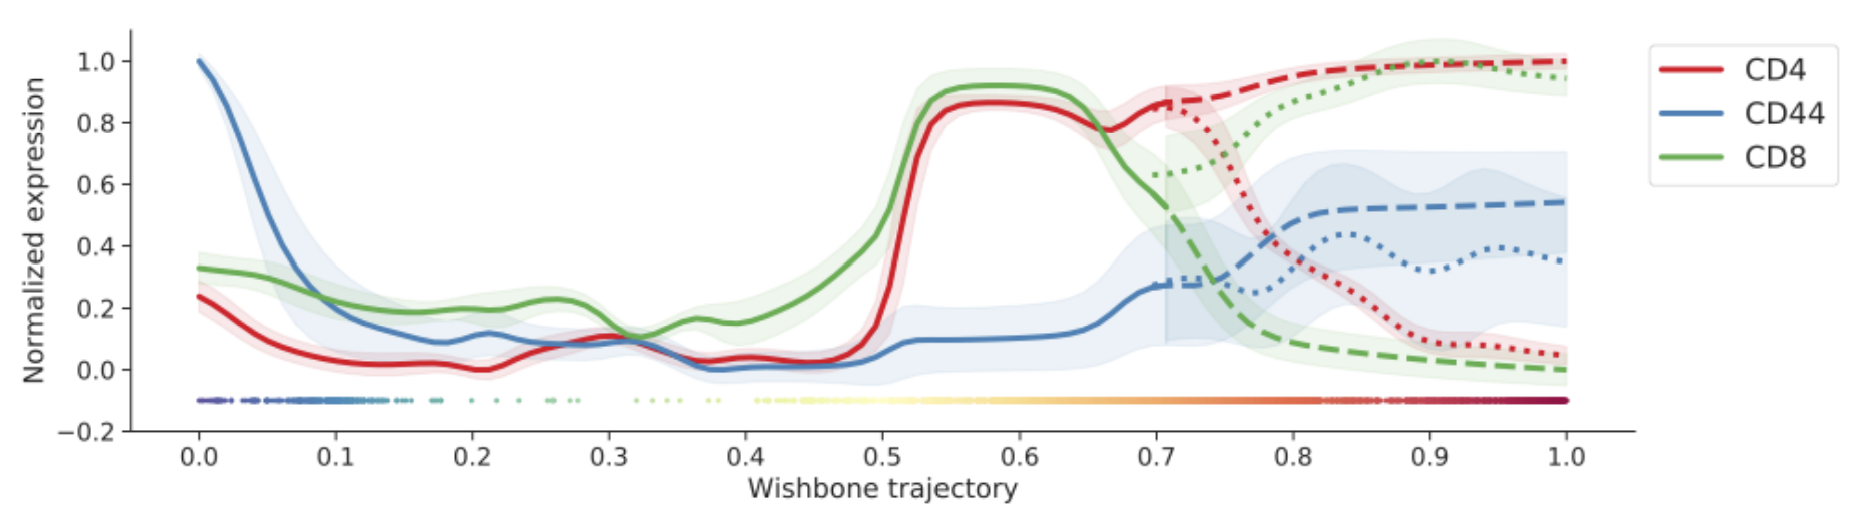 Wishbone trajectory